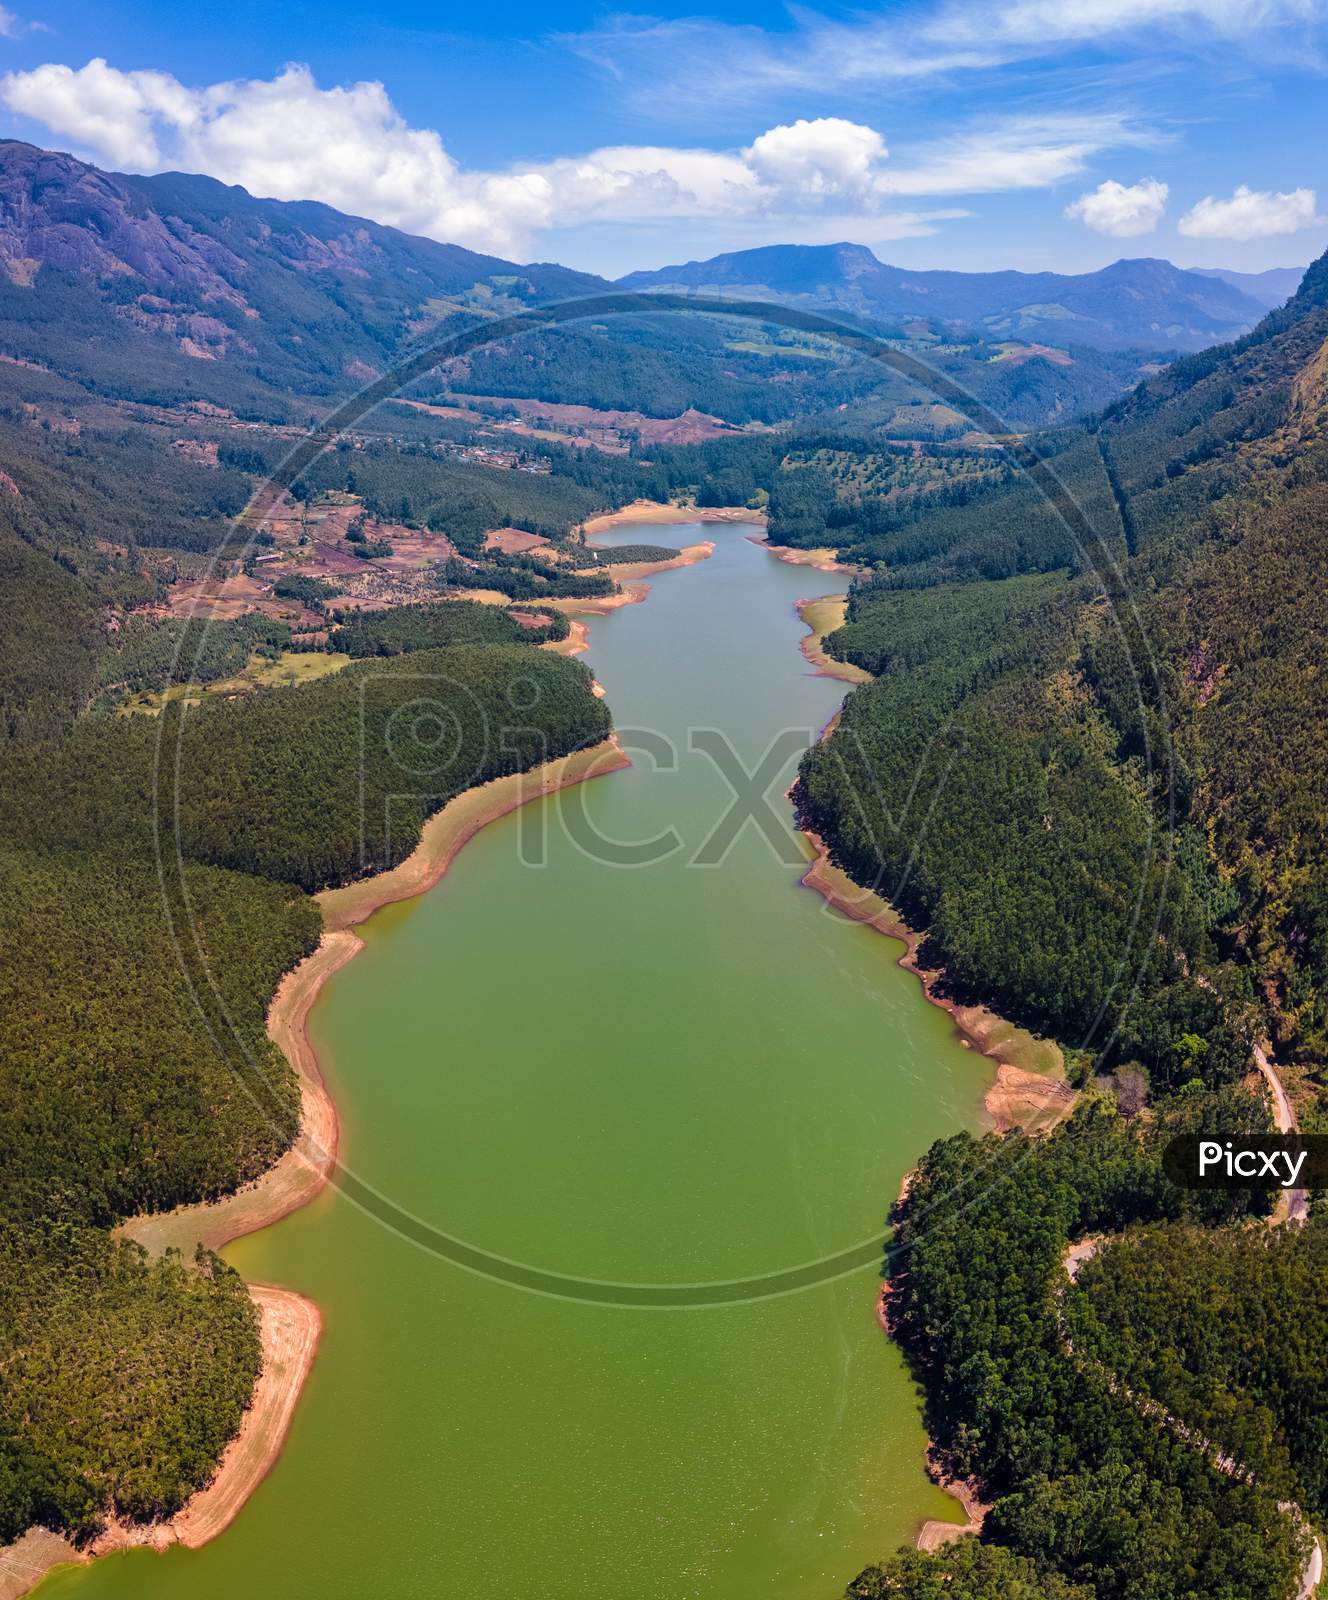 Matupatty River Drone View